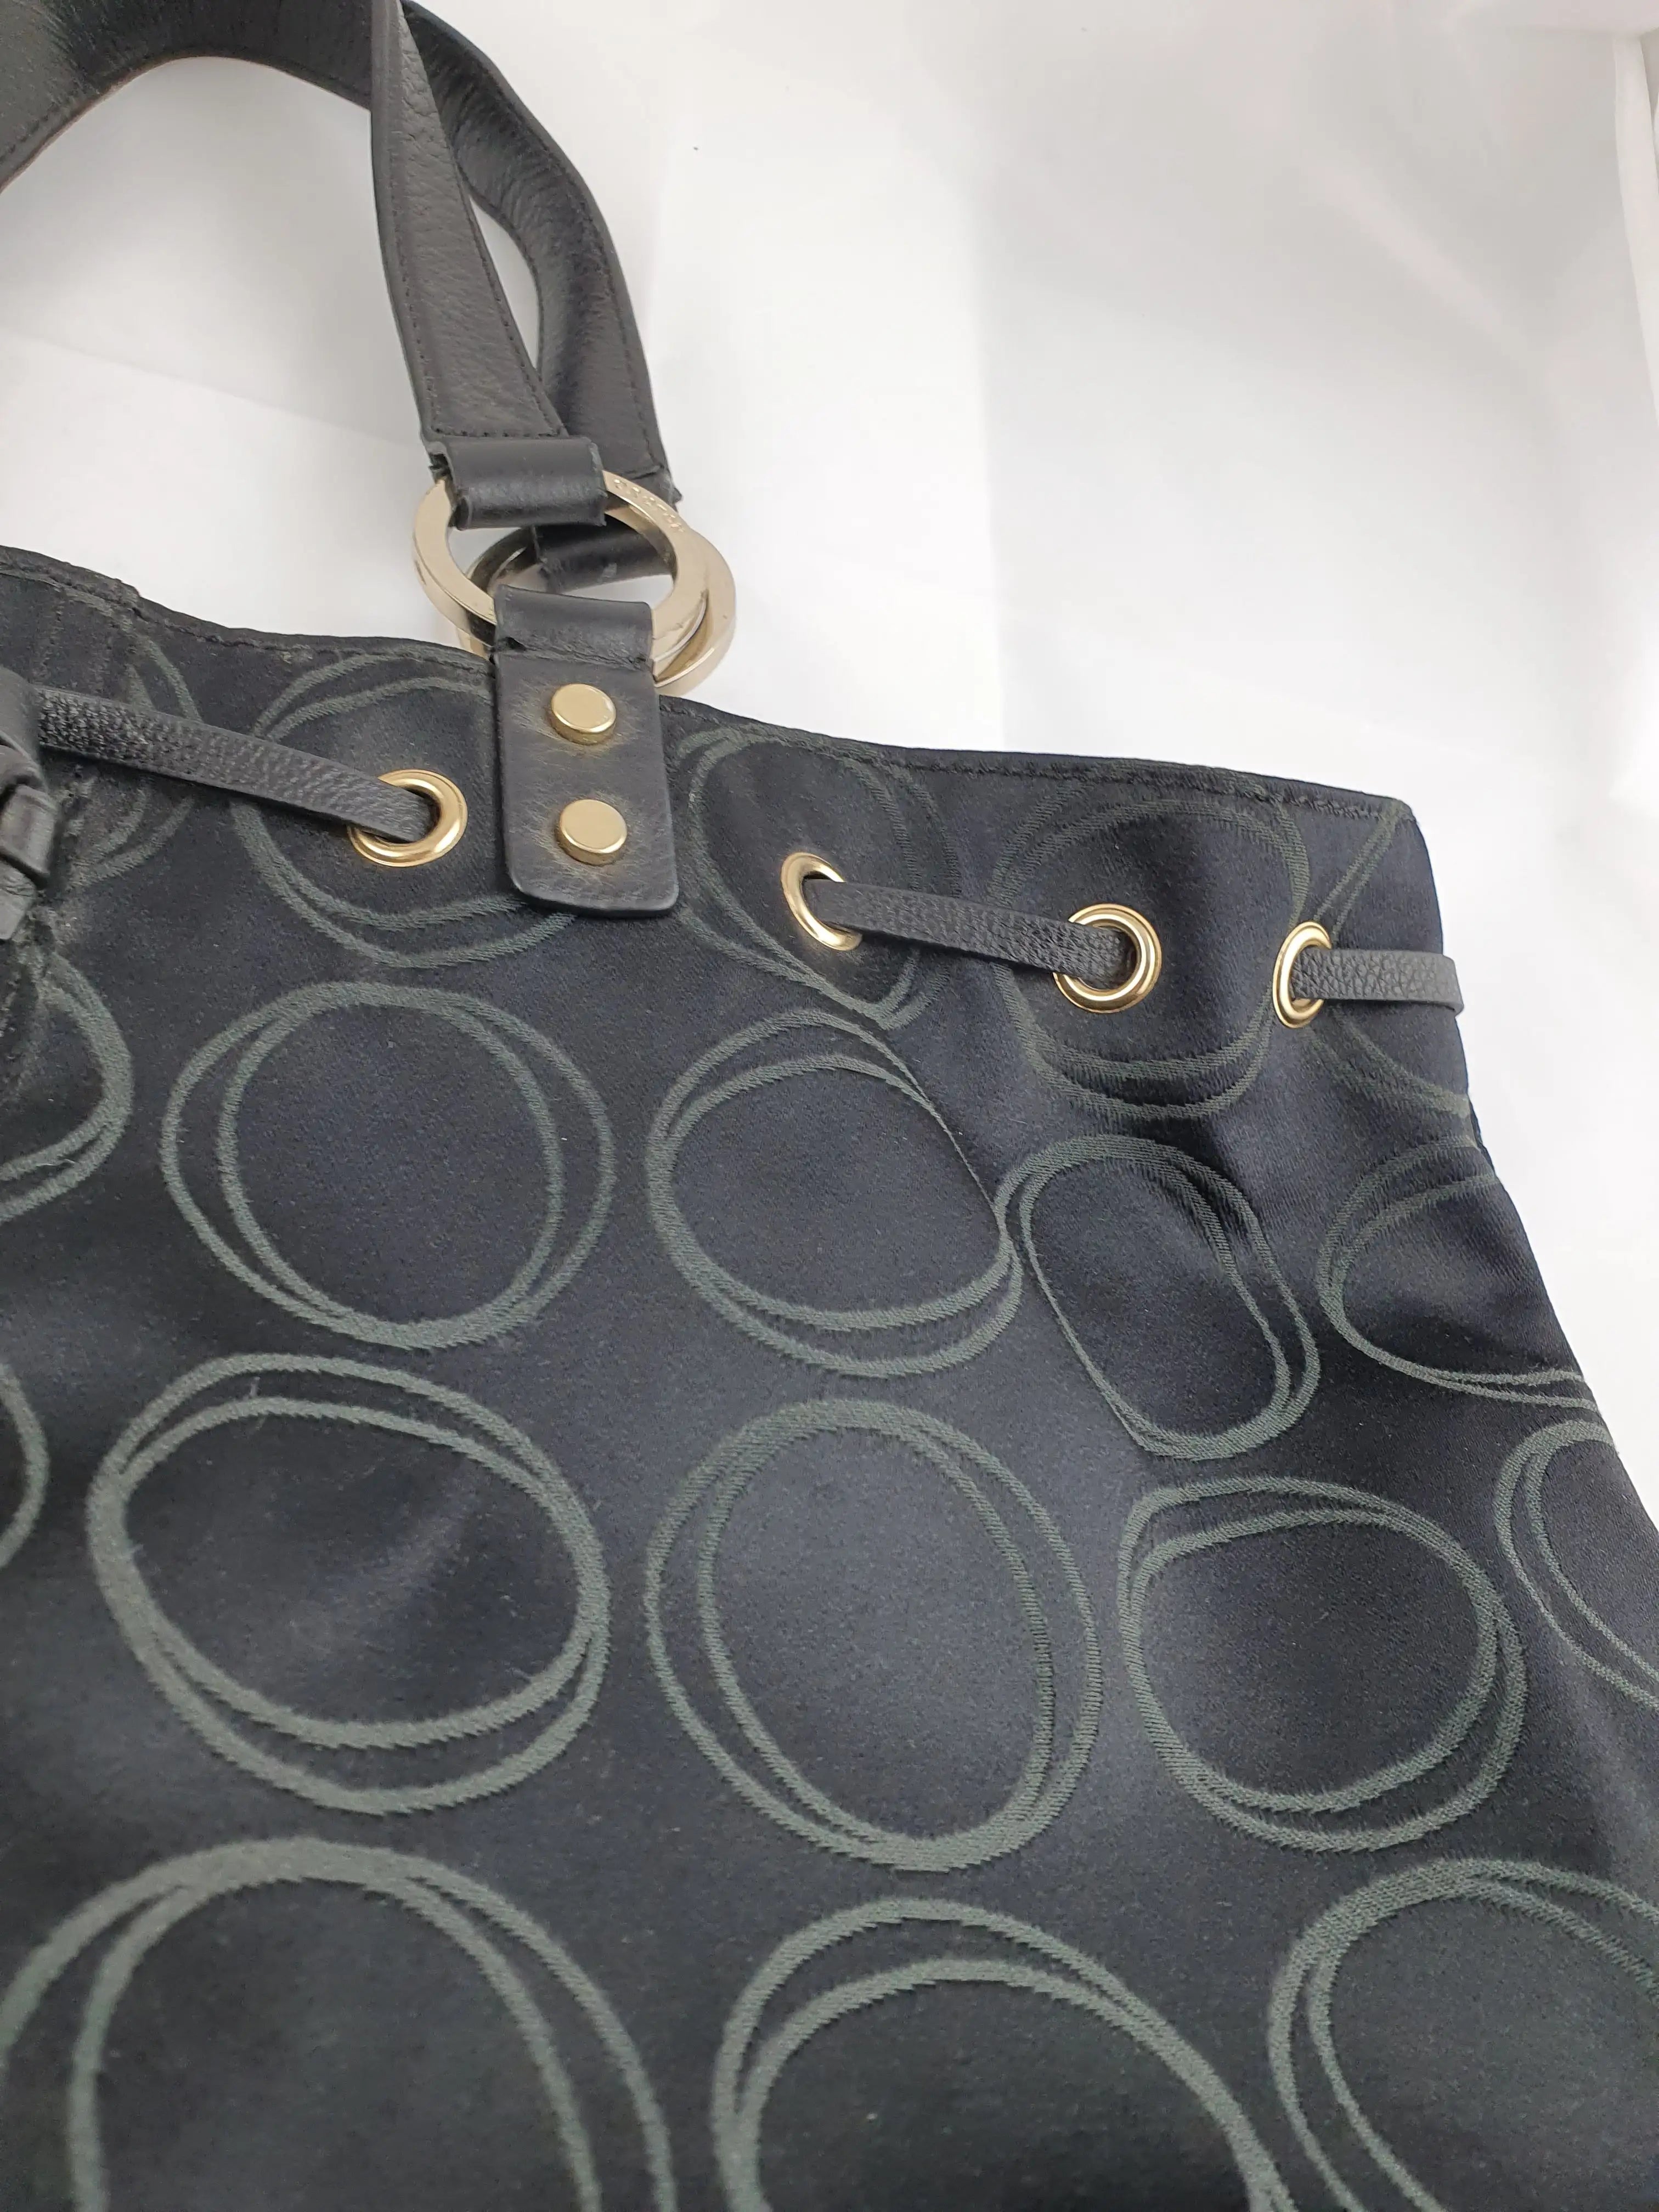 Coach F58292 Signature City Zip Tote Handbag Purse Shoulder Bag: Buy Online  at Best Price in UAE - Amazon.ae